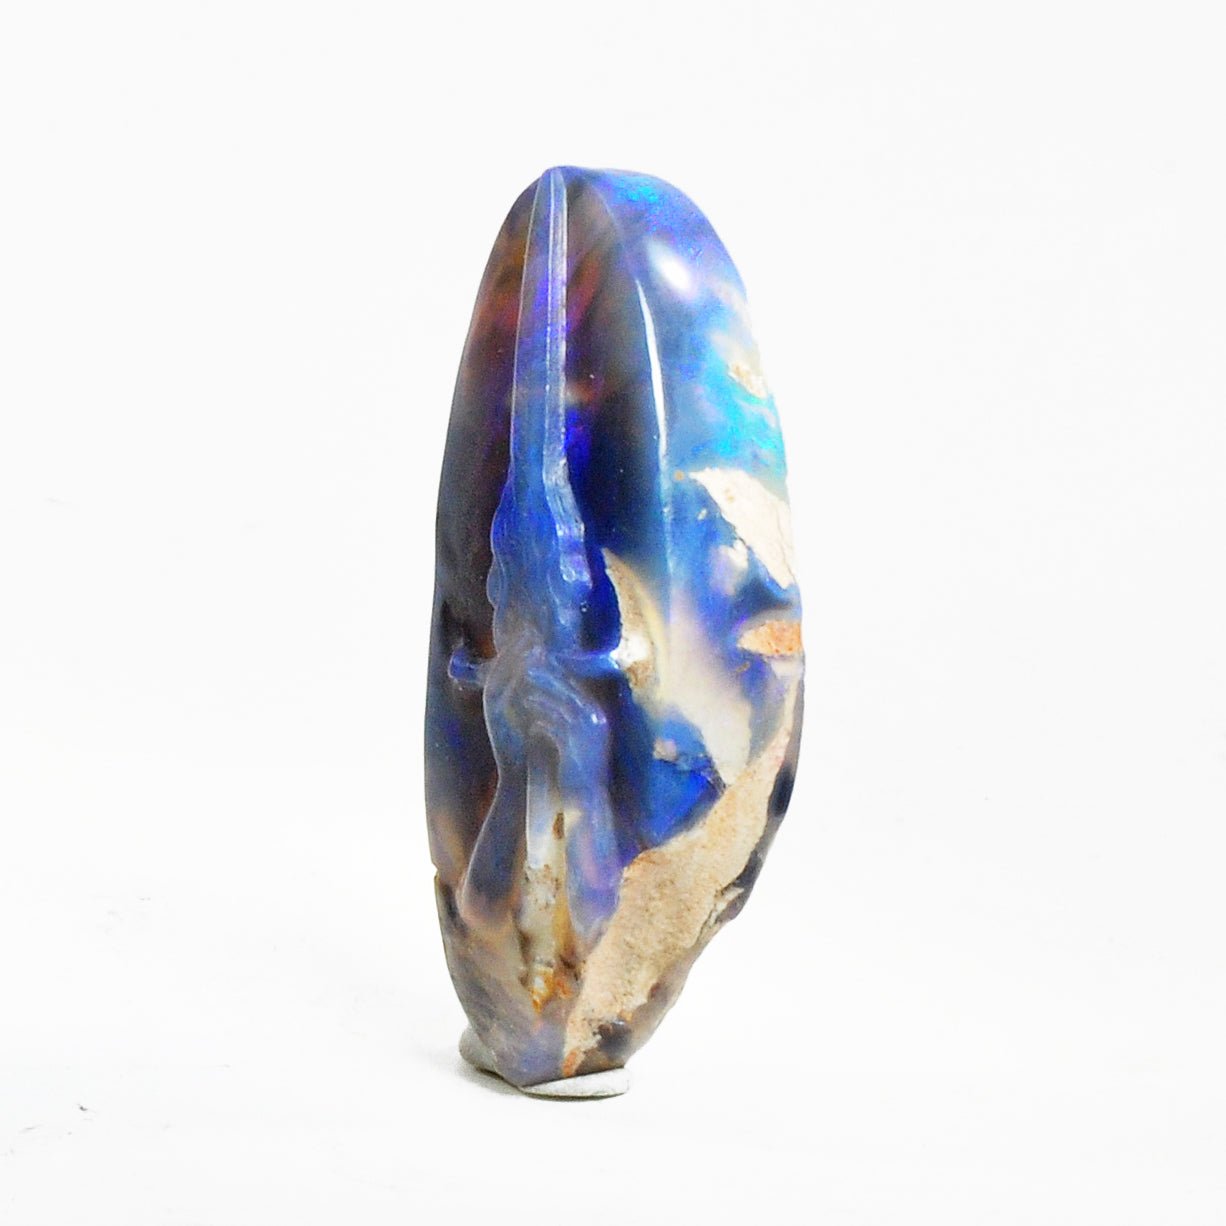 King Arthur's Excalibur 28 ct Opal Gemstone Carving - EEF-022 - Crystalarium